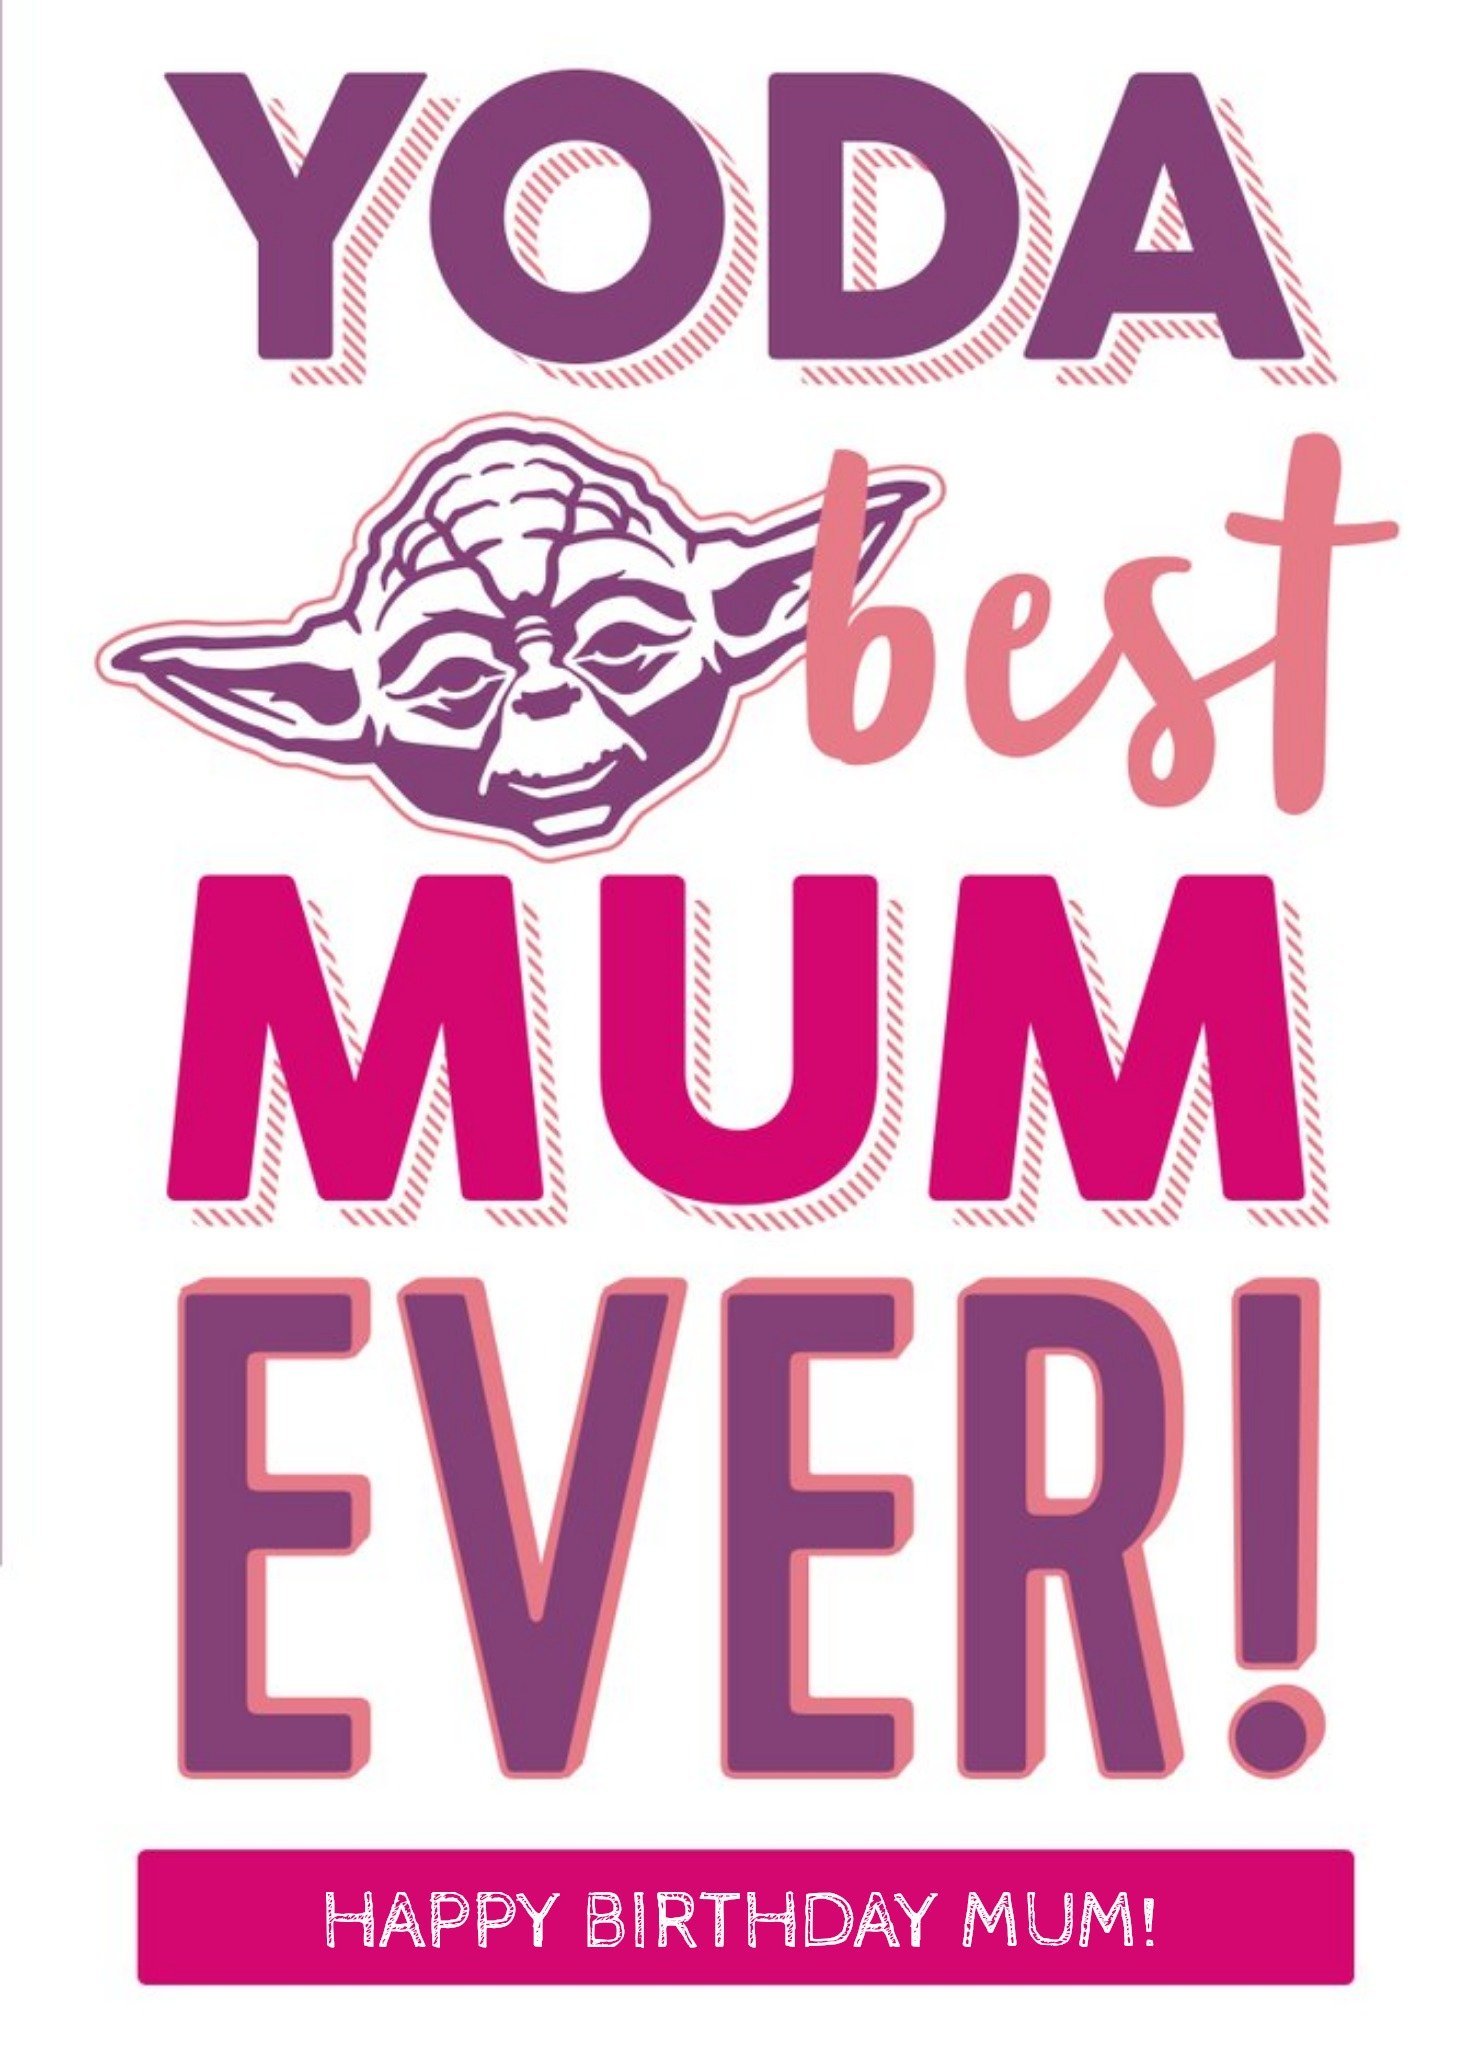 Disney Star Wars Birthday Card - Yoda Best Mum Ever, Large